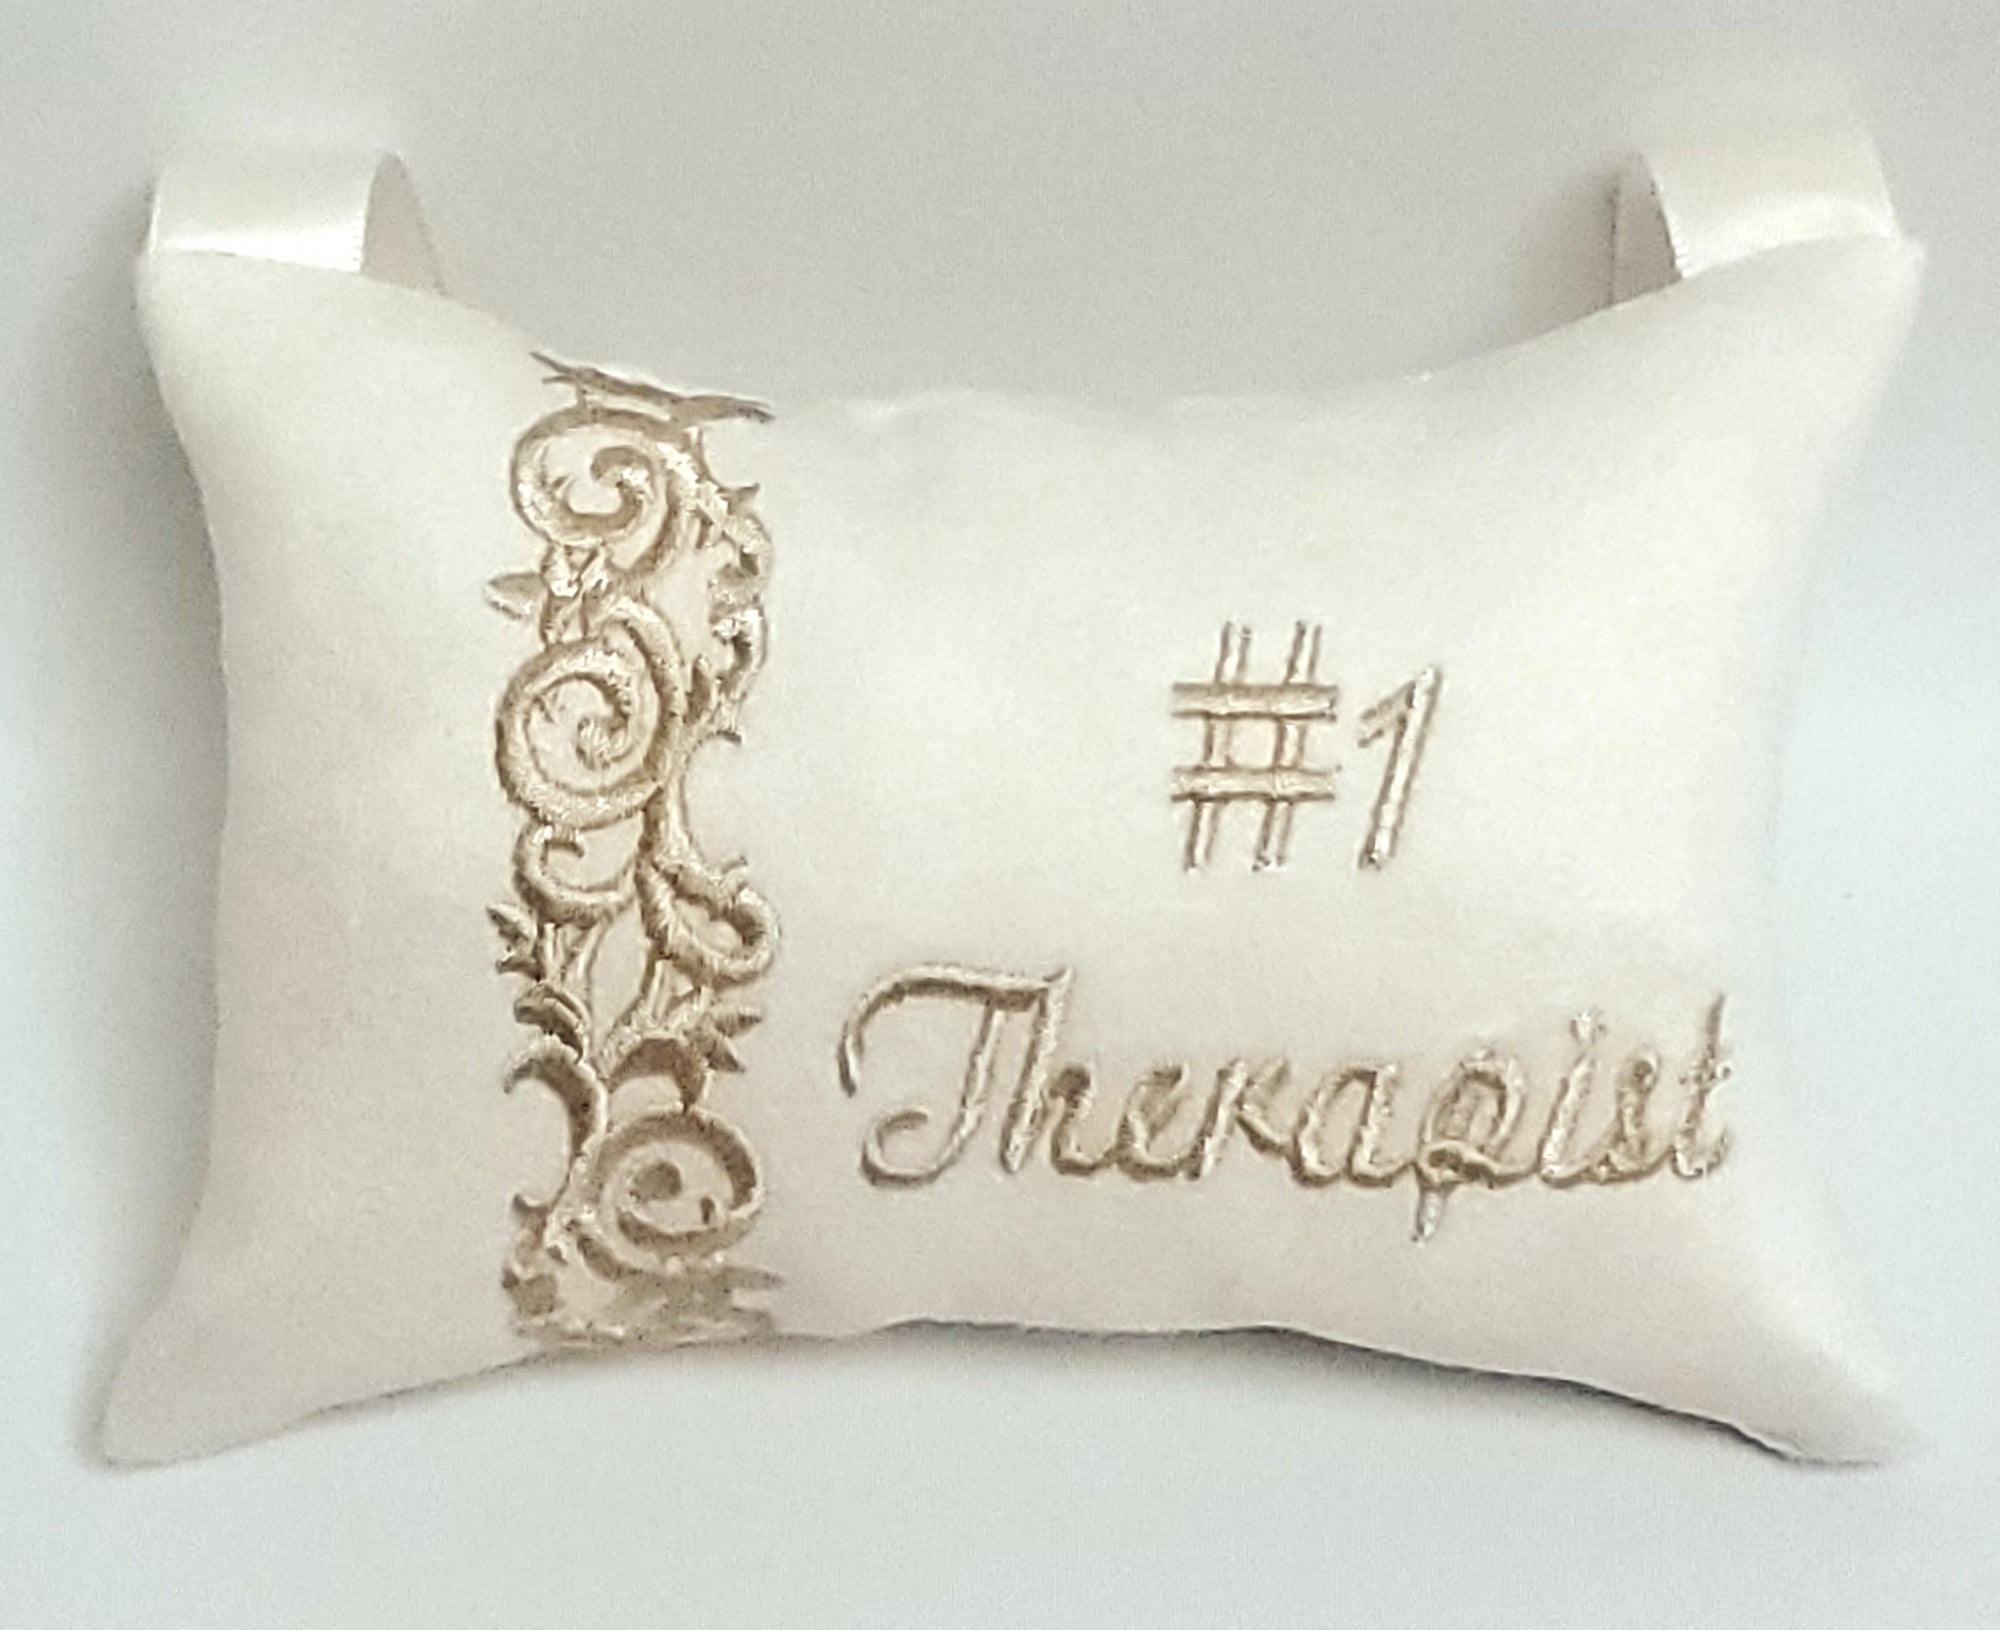 #1 Therapist Pillow